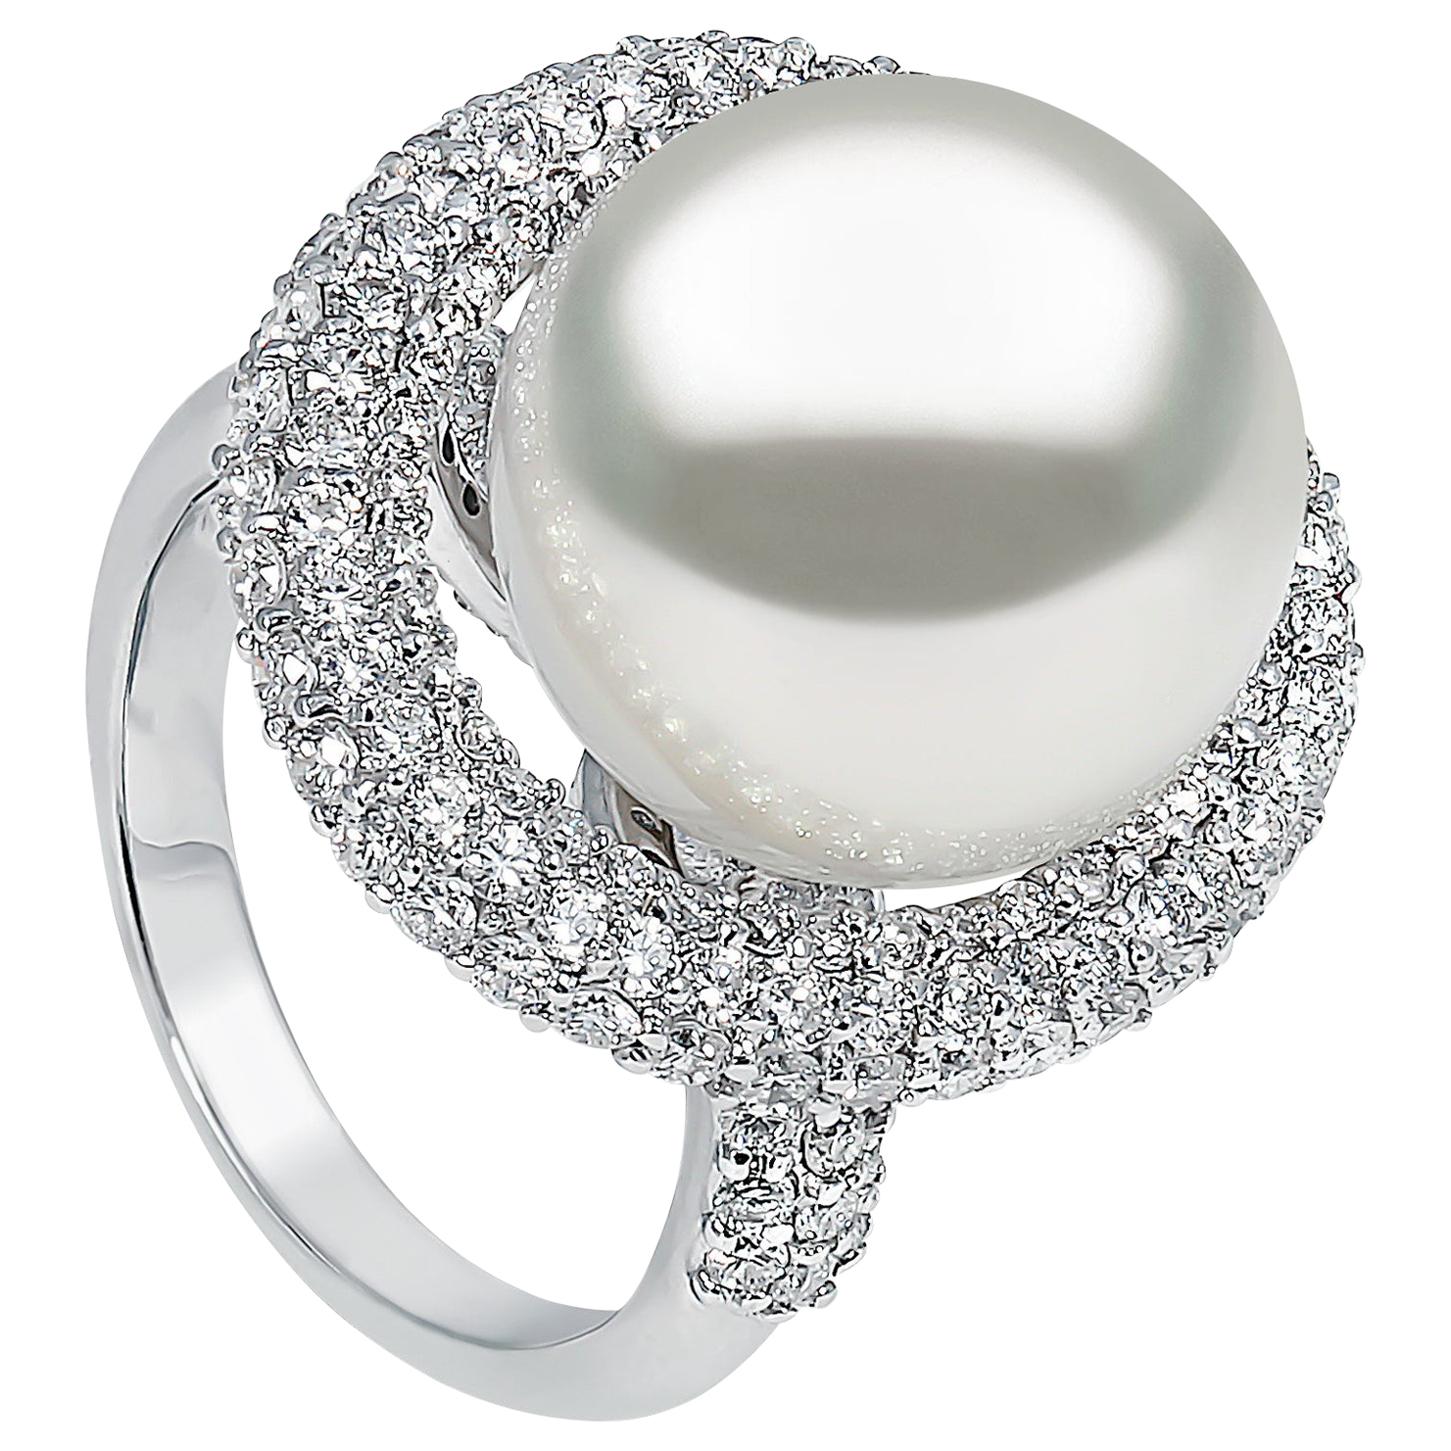 Yoko London South Sea Pearl and Diamond Ring in 18 Karat White Gold